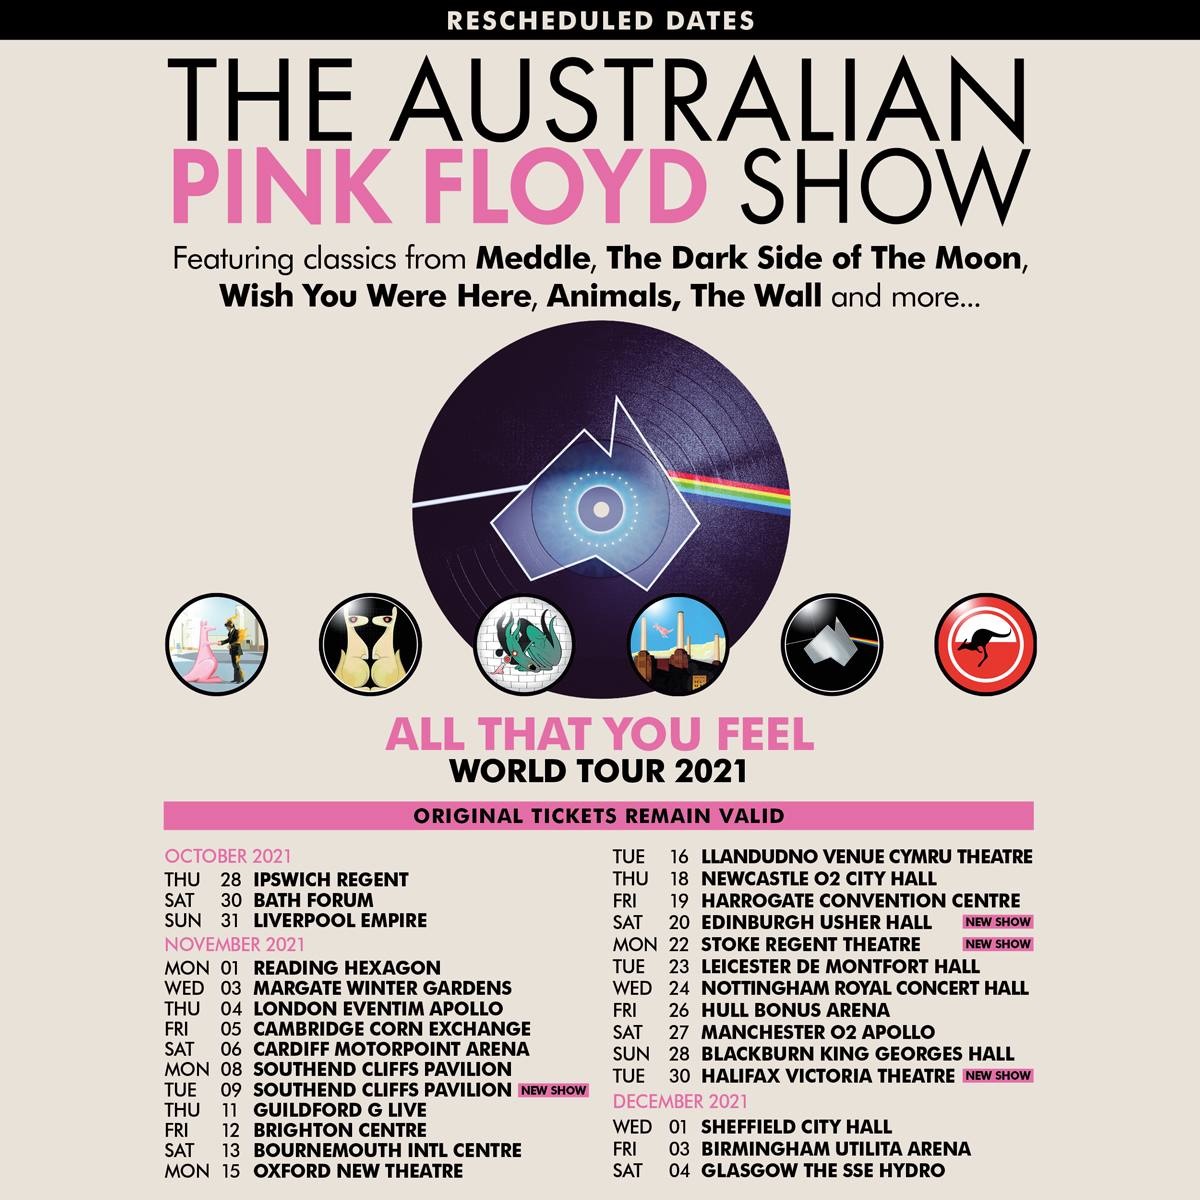 The Australian Pink Floyd Show rescheduled Brighton concert date